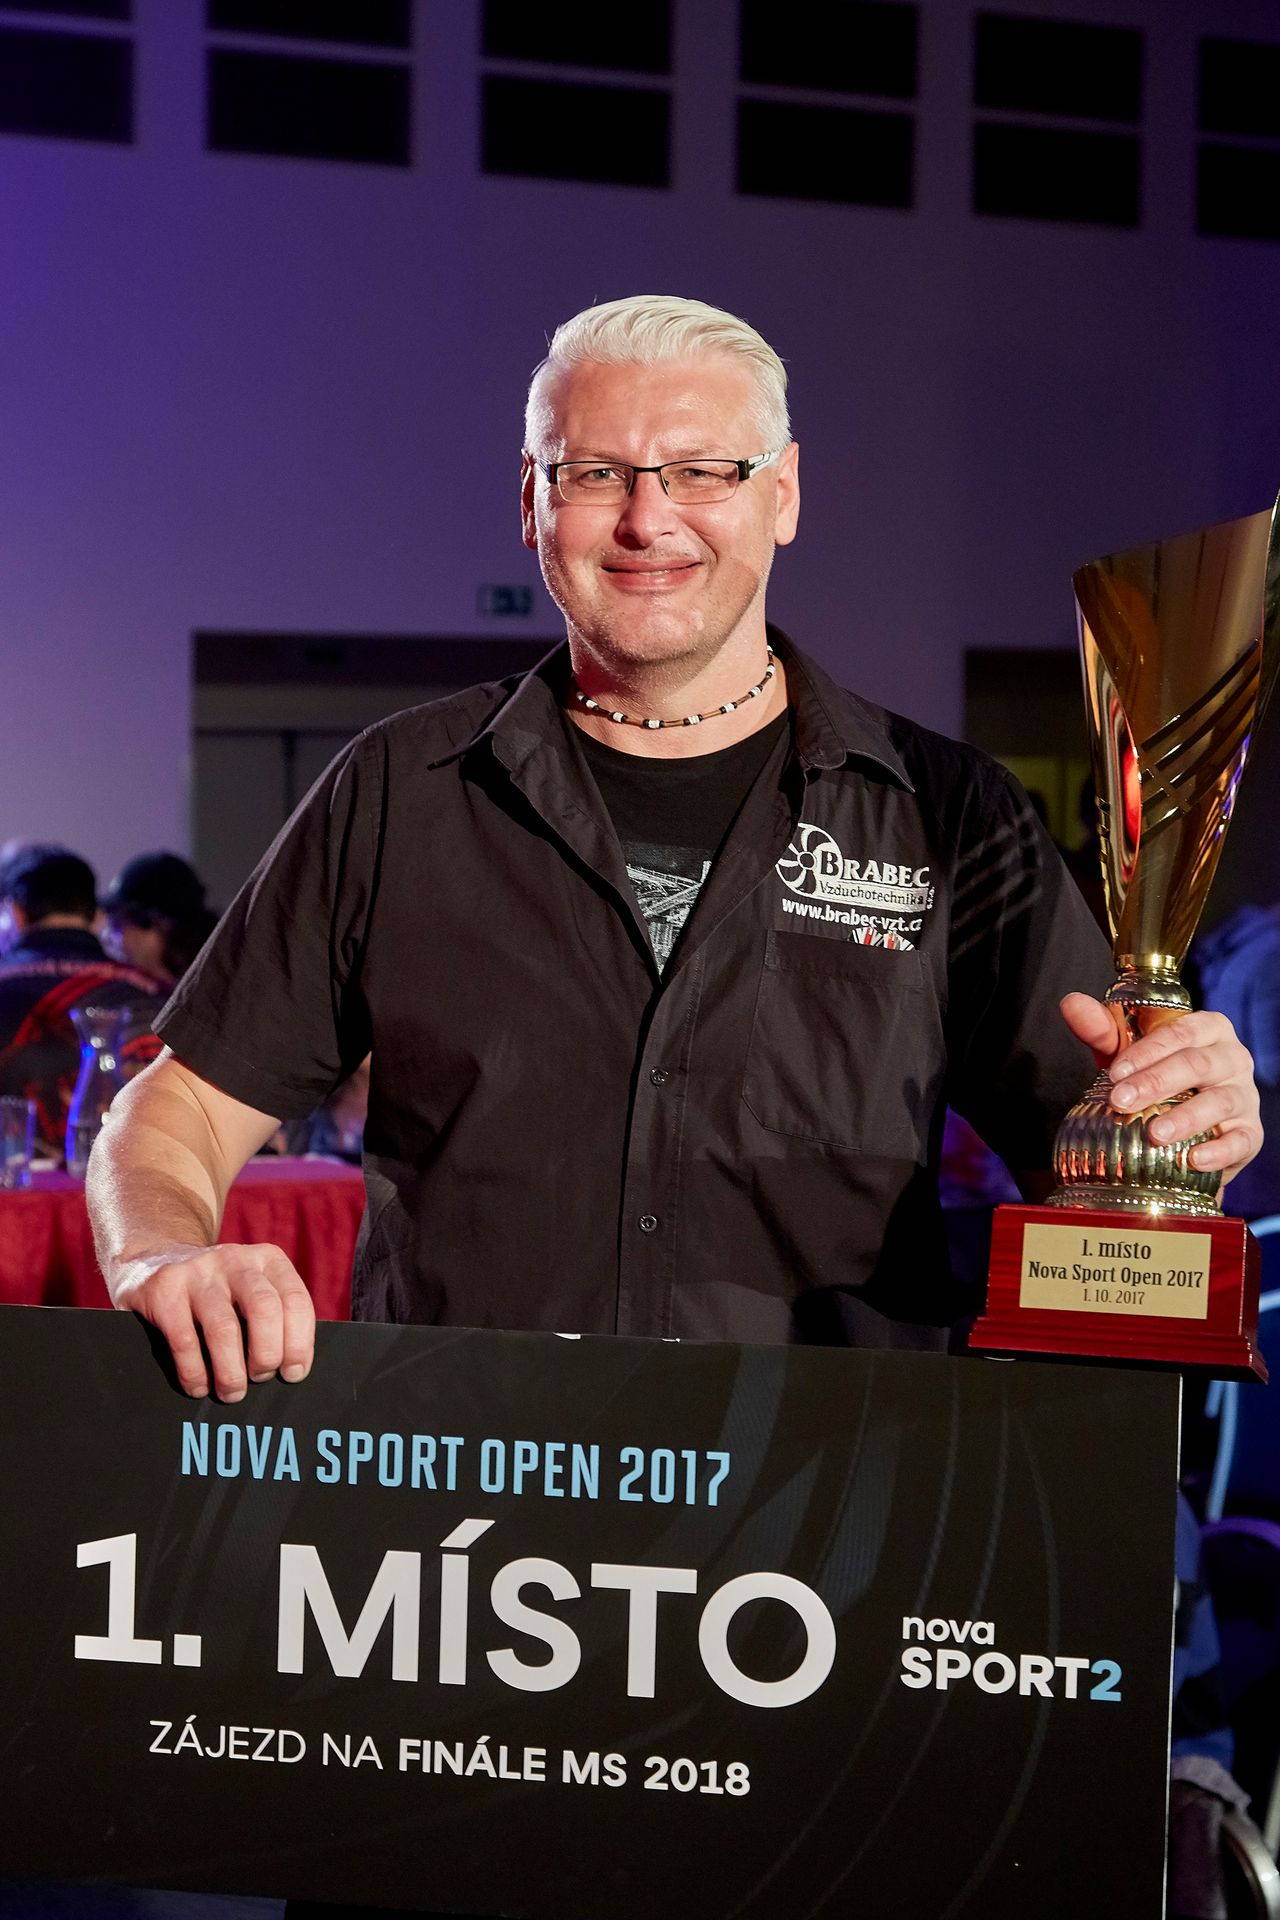 Nova Sport Open 2017 - GALERIE: Nova Sport Open 2017 (12/12)